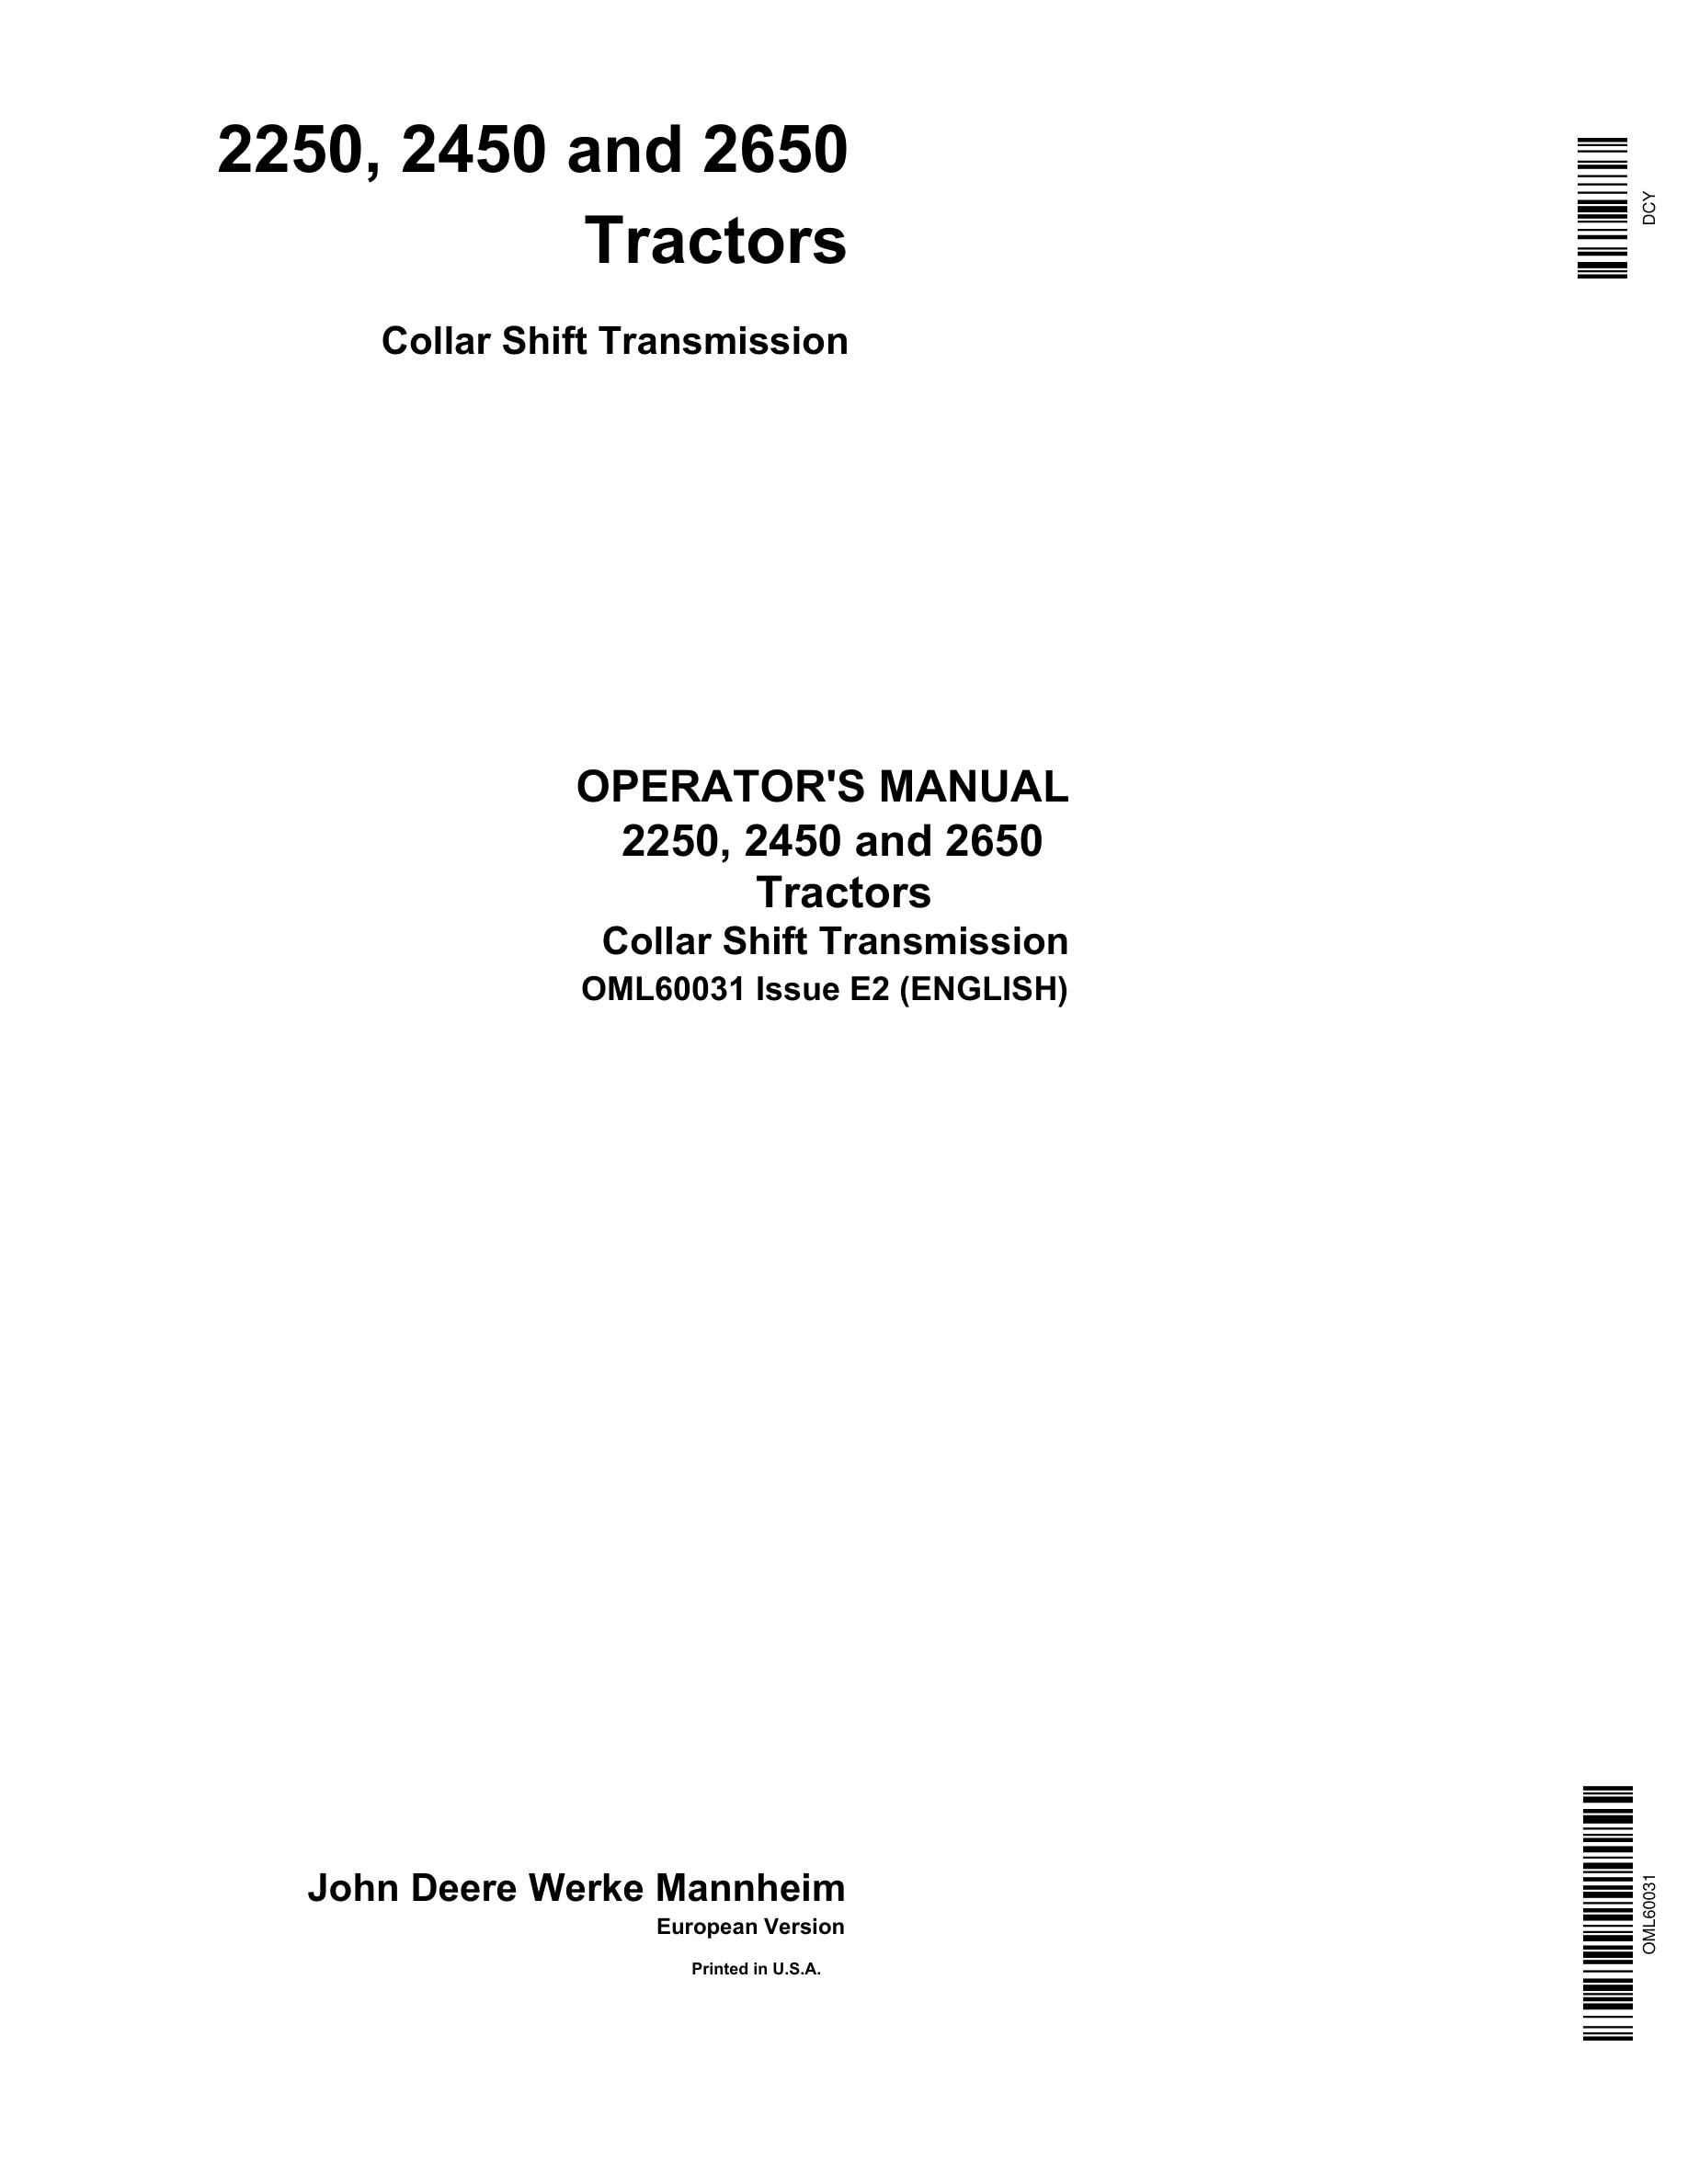 John Deere 2250, 2450 And 2650 Tractors Operator Manuals OML60031-1